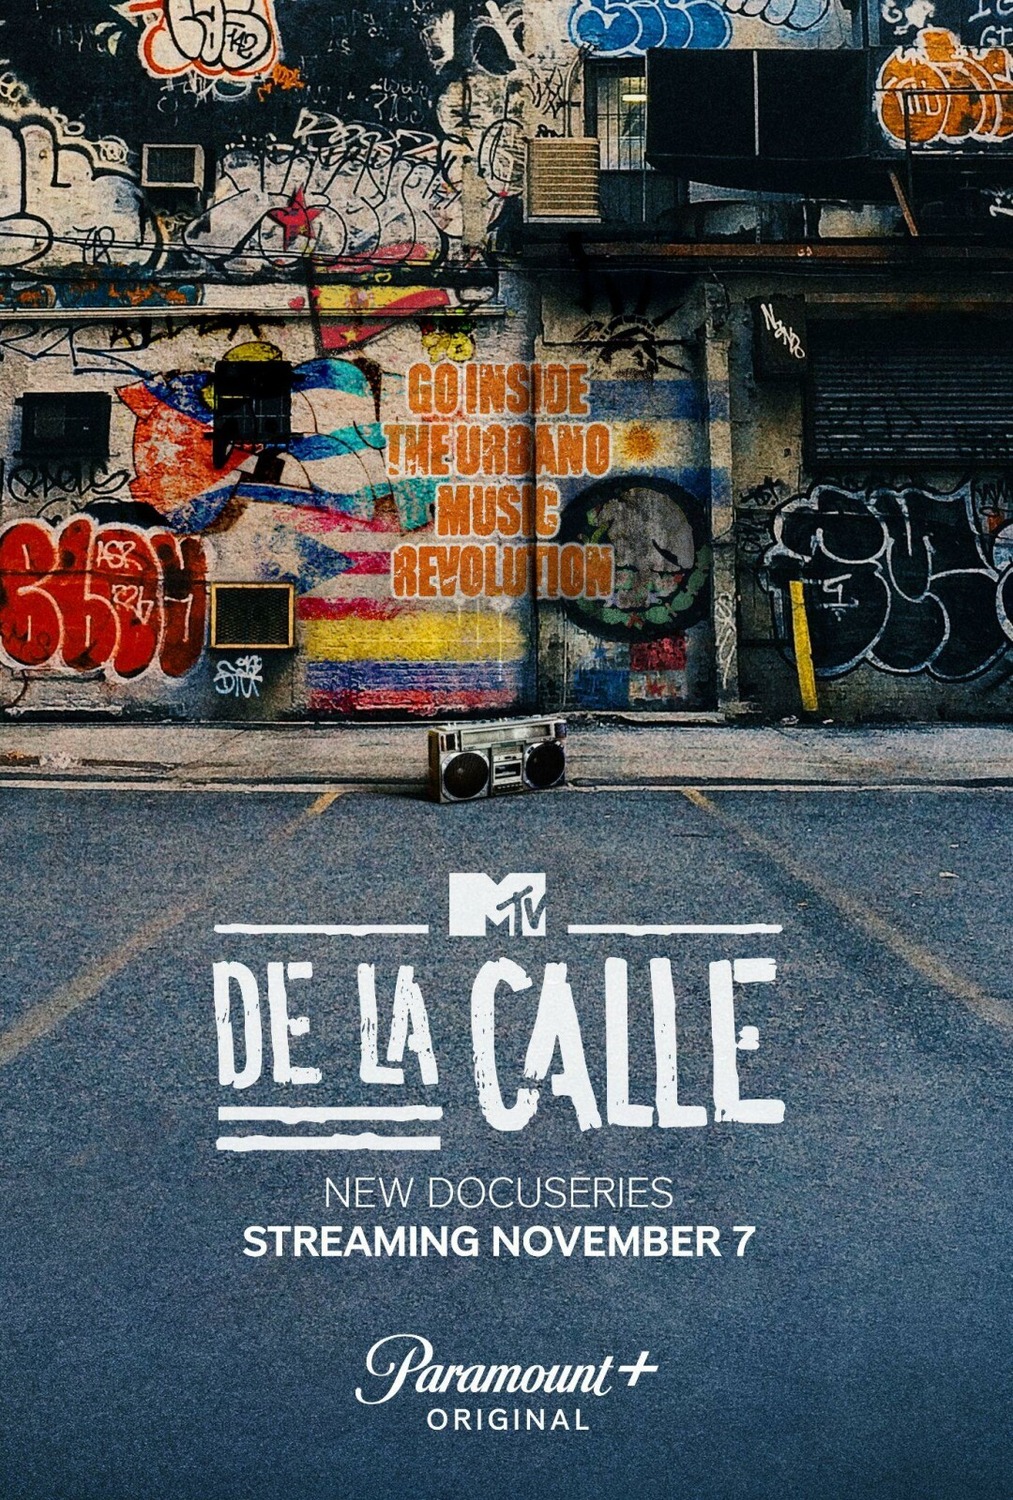 Extra Large TV Poster Image for De La Calle 